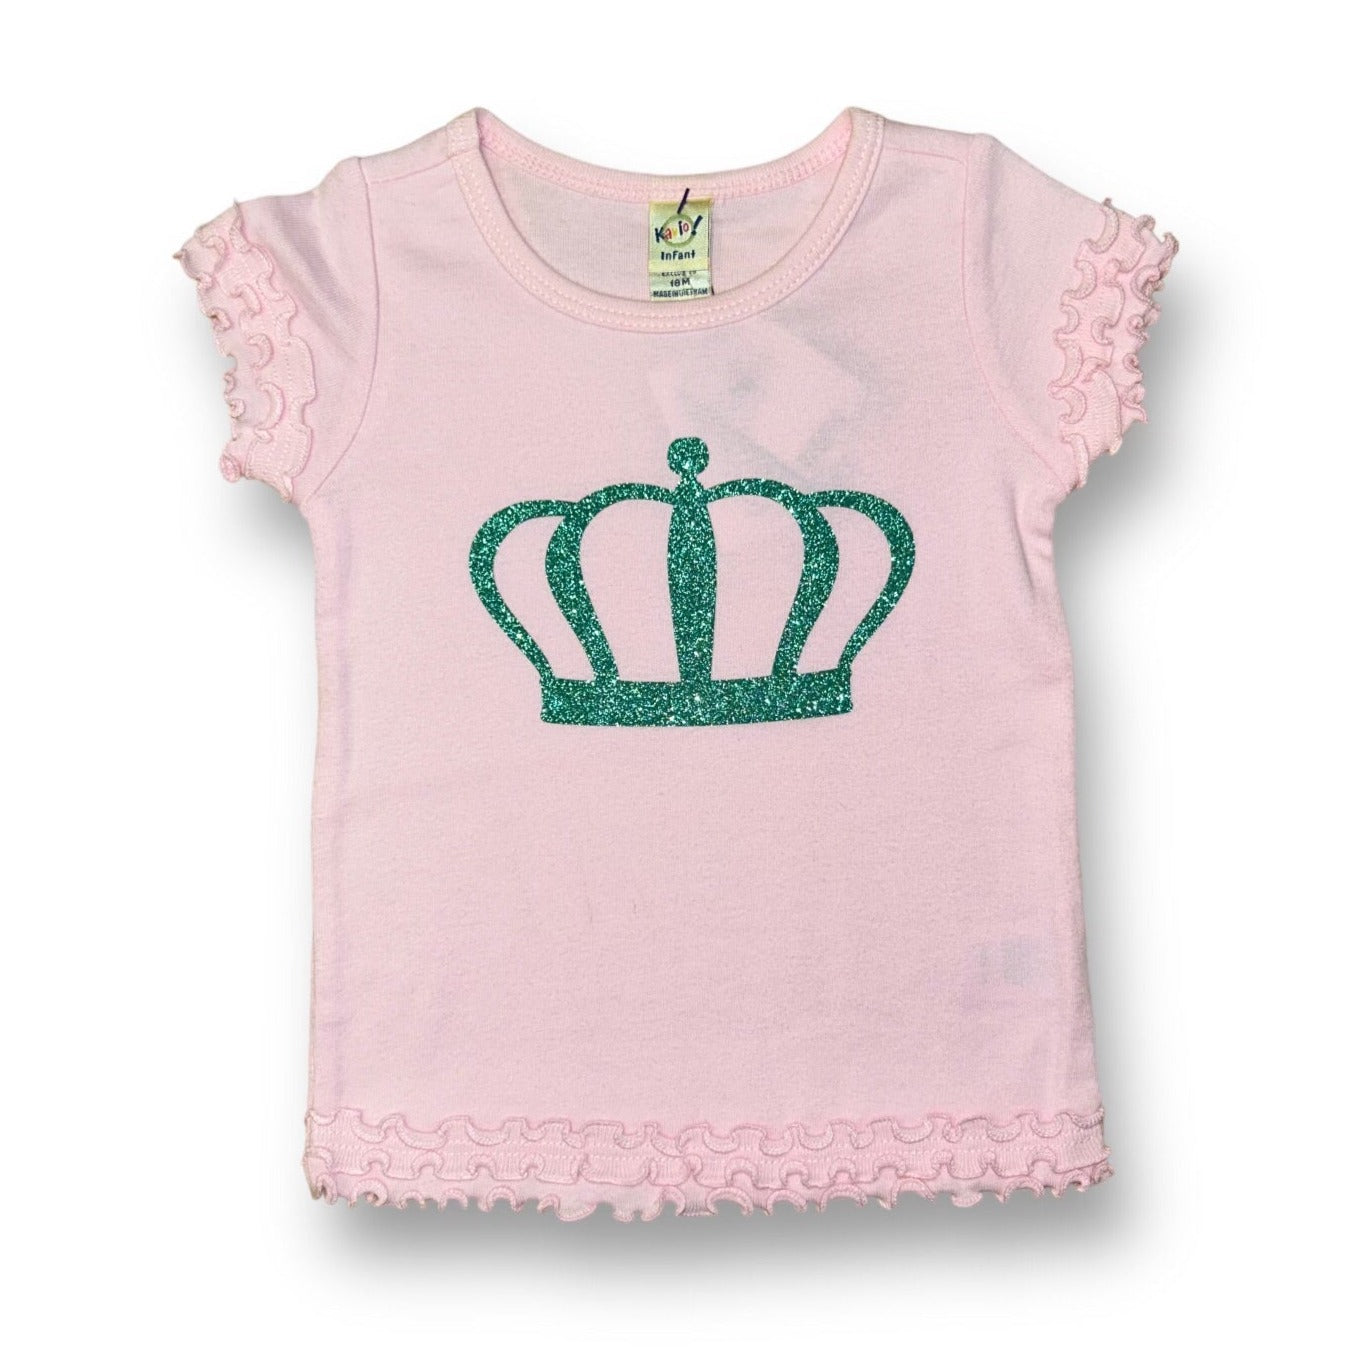 NEW! Girls Size 18 Months Light Pink Princess Ruffle Sleeve Boutique Top